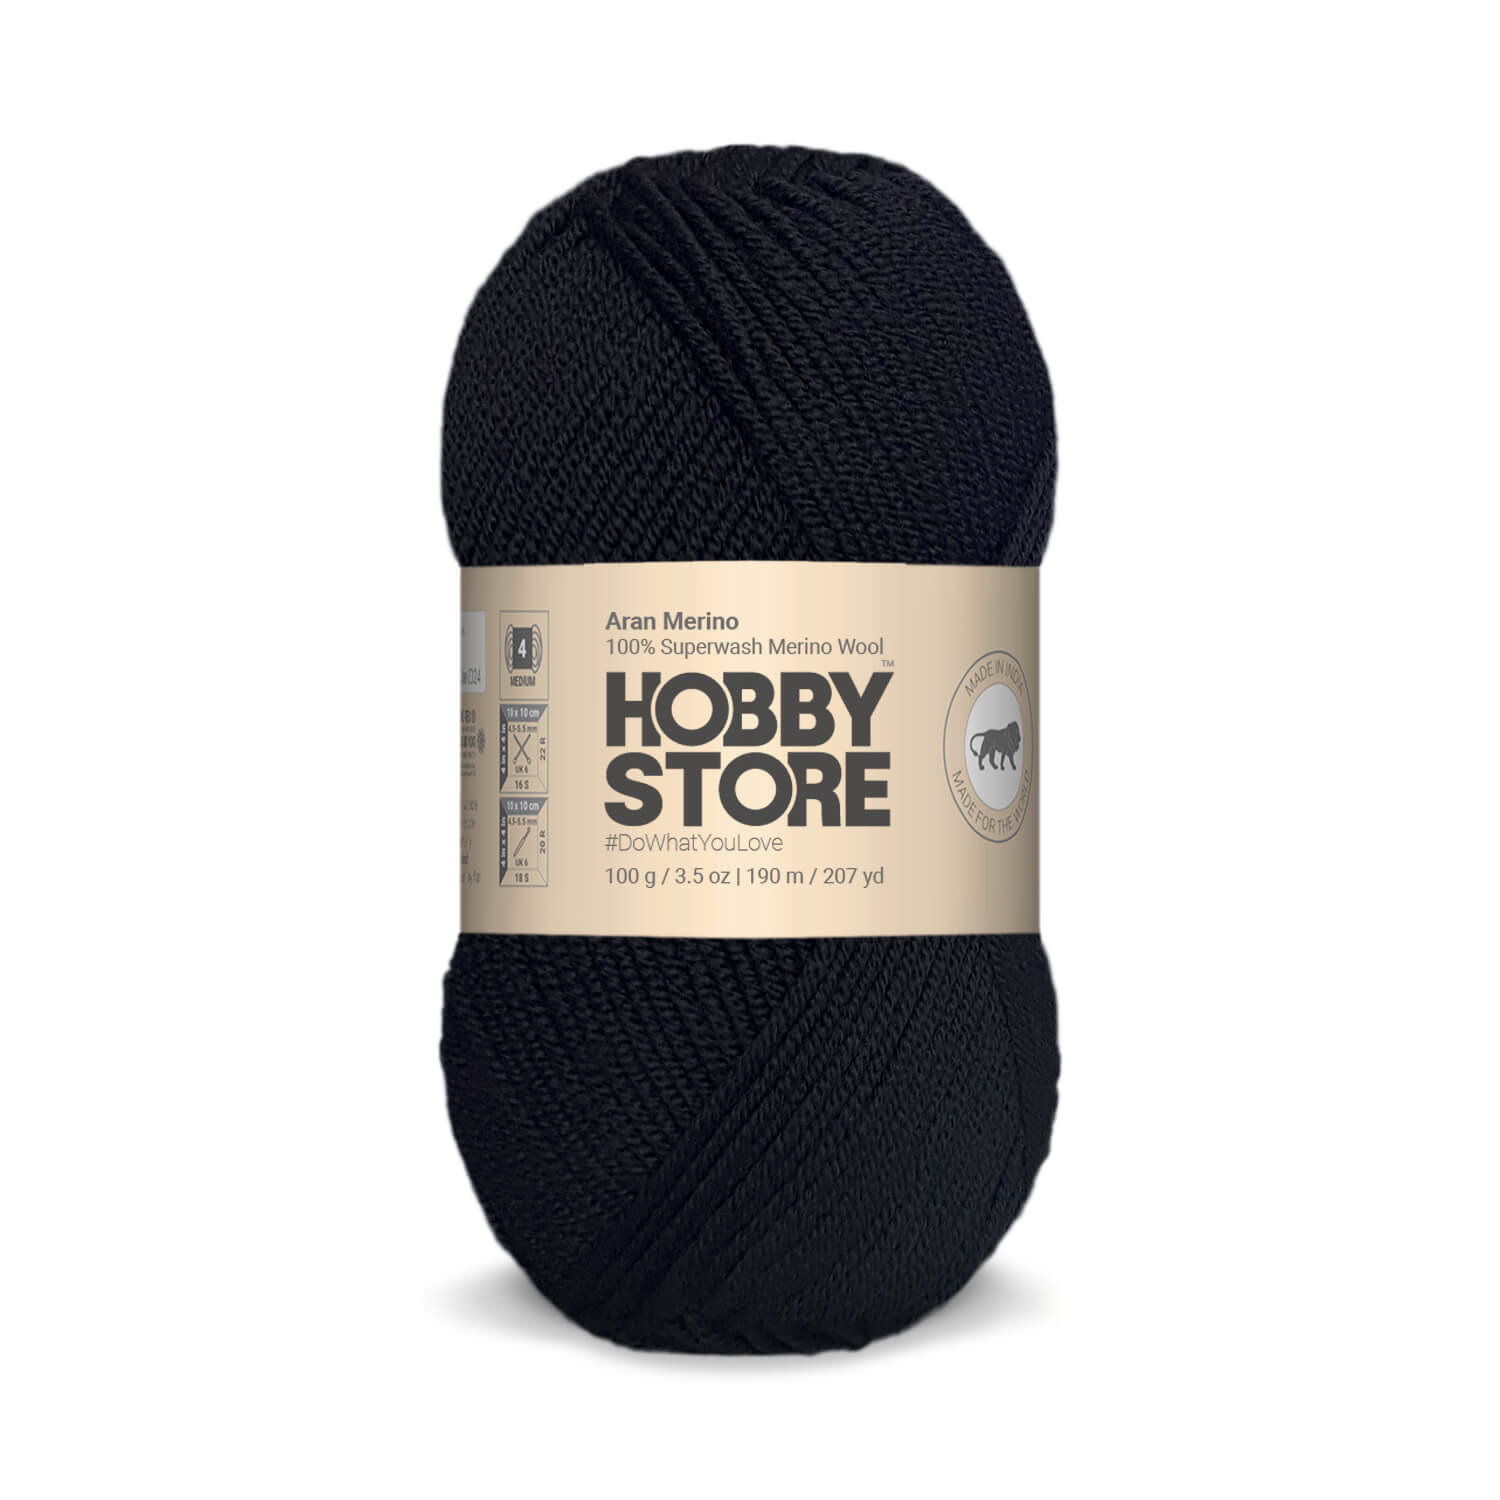 Aran Merino Wool by Hobby Store - Black AM006